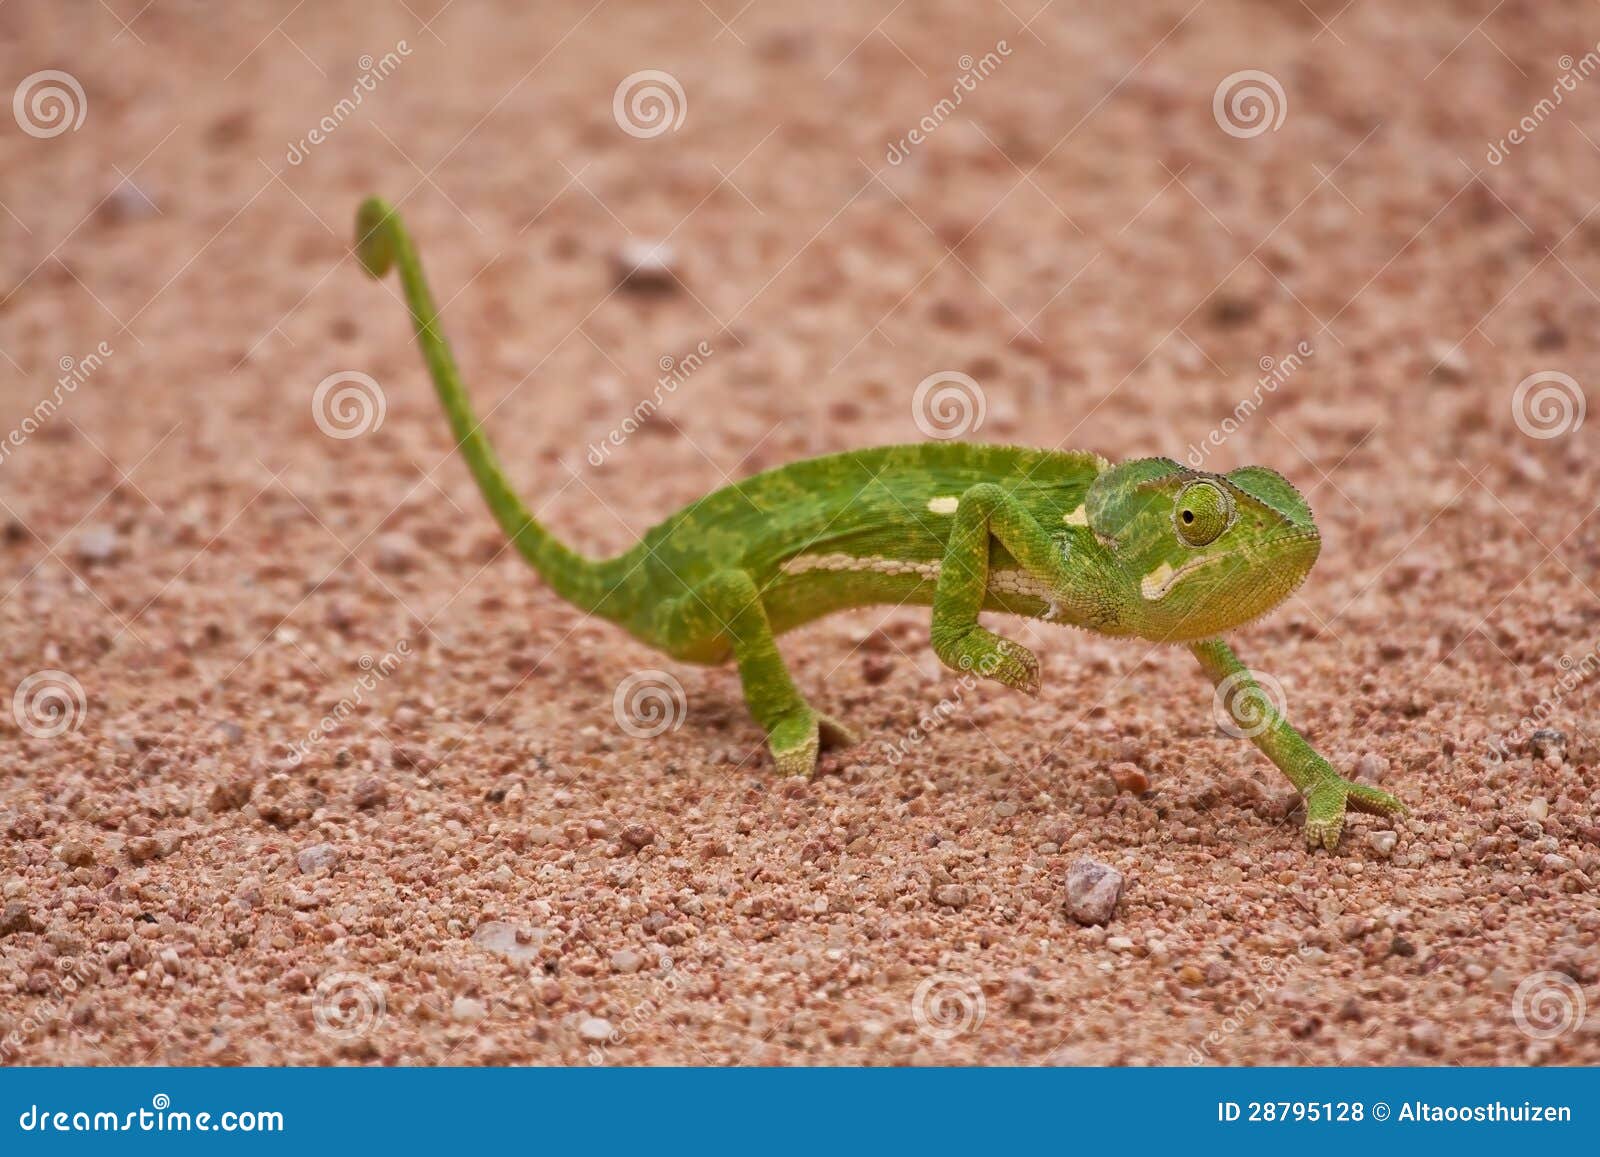 Chameleon walking on sand stock photo. Image of reptile ...